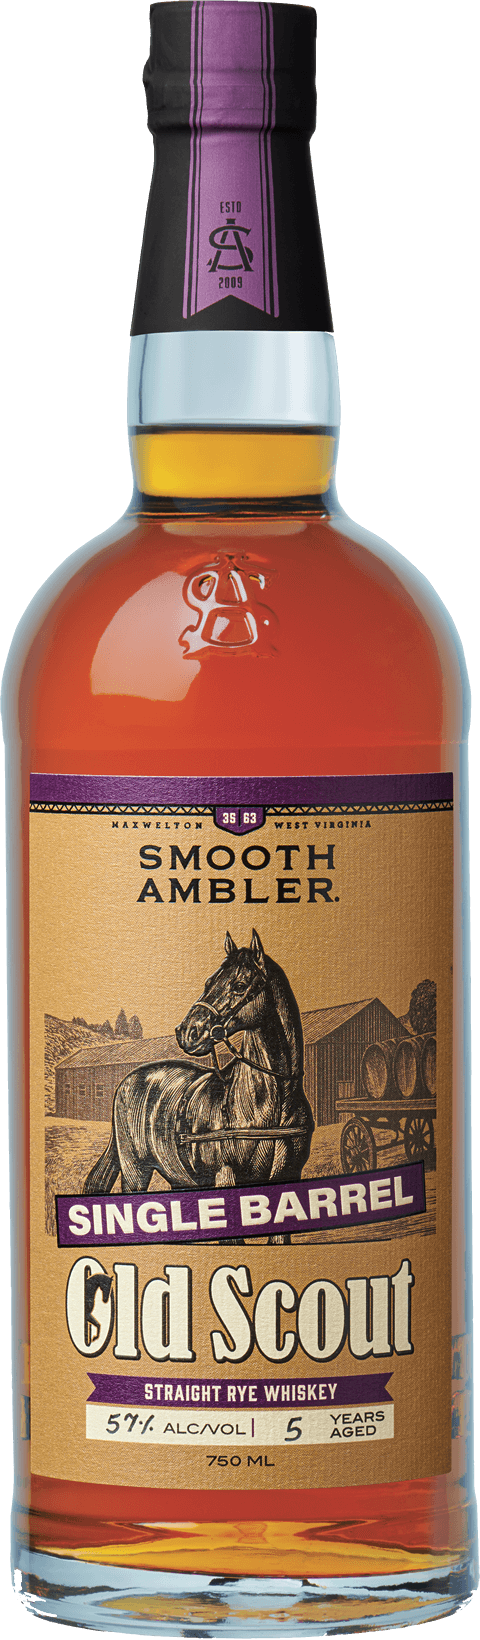 smooth-ambler-old-scout-single-barrel-rye-whiskey-page-bottle